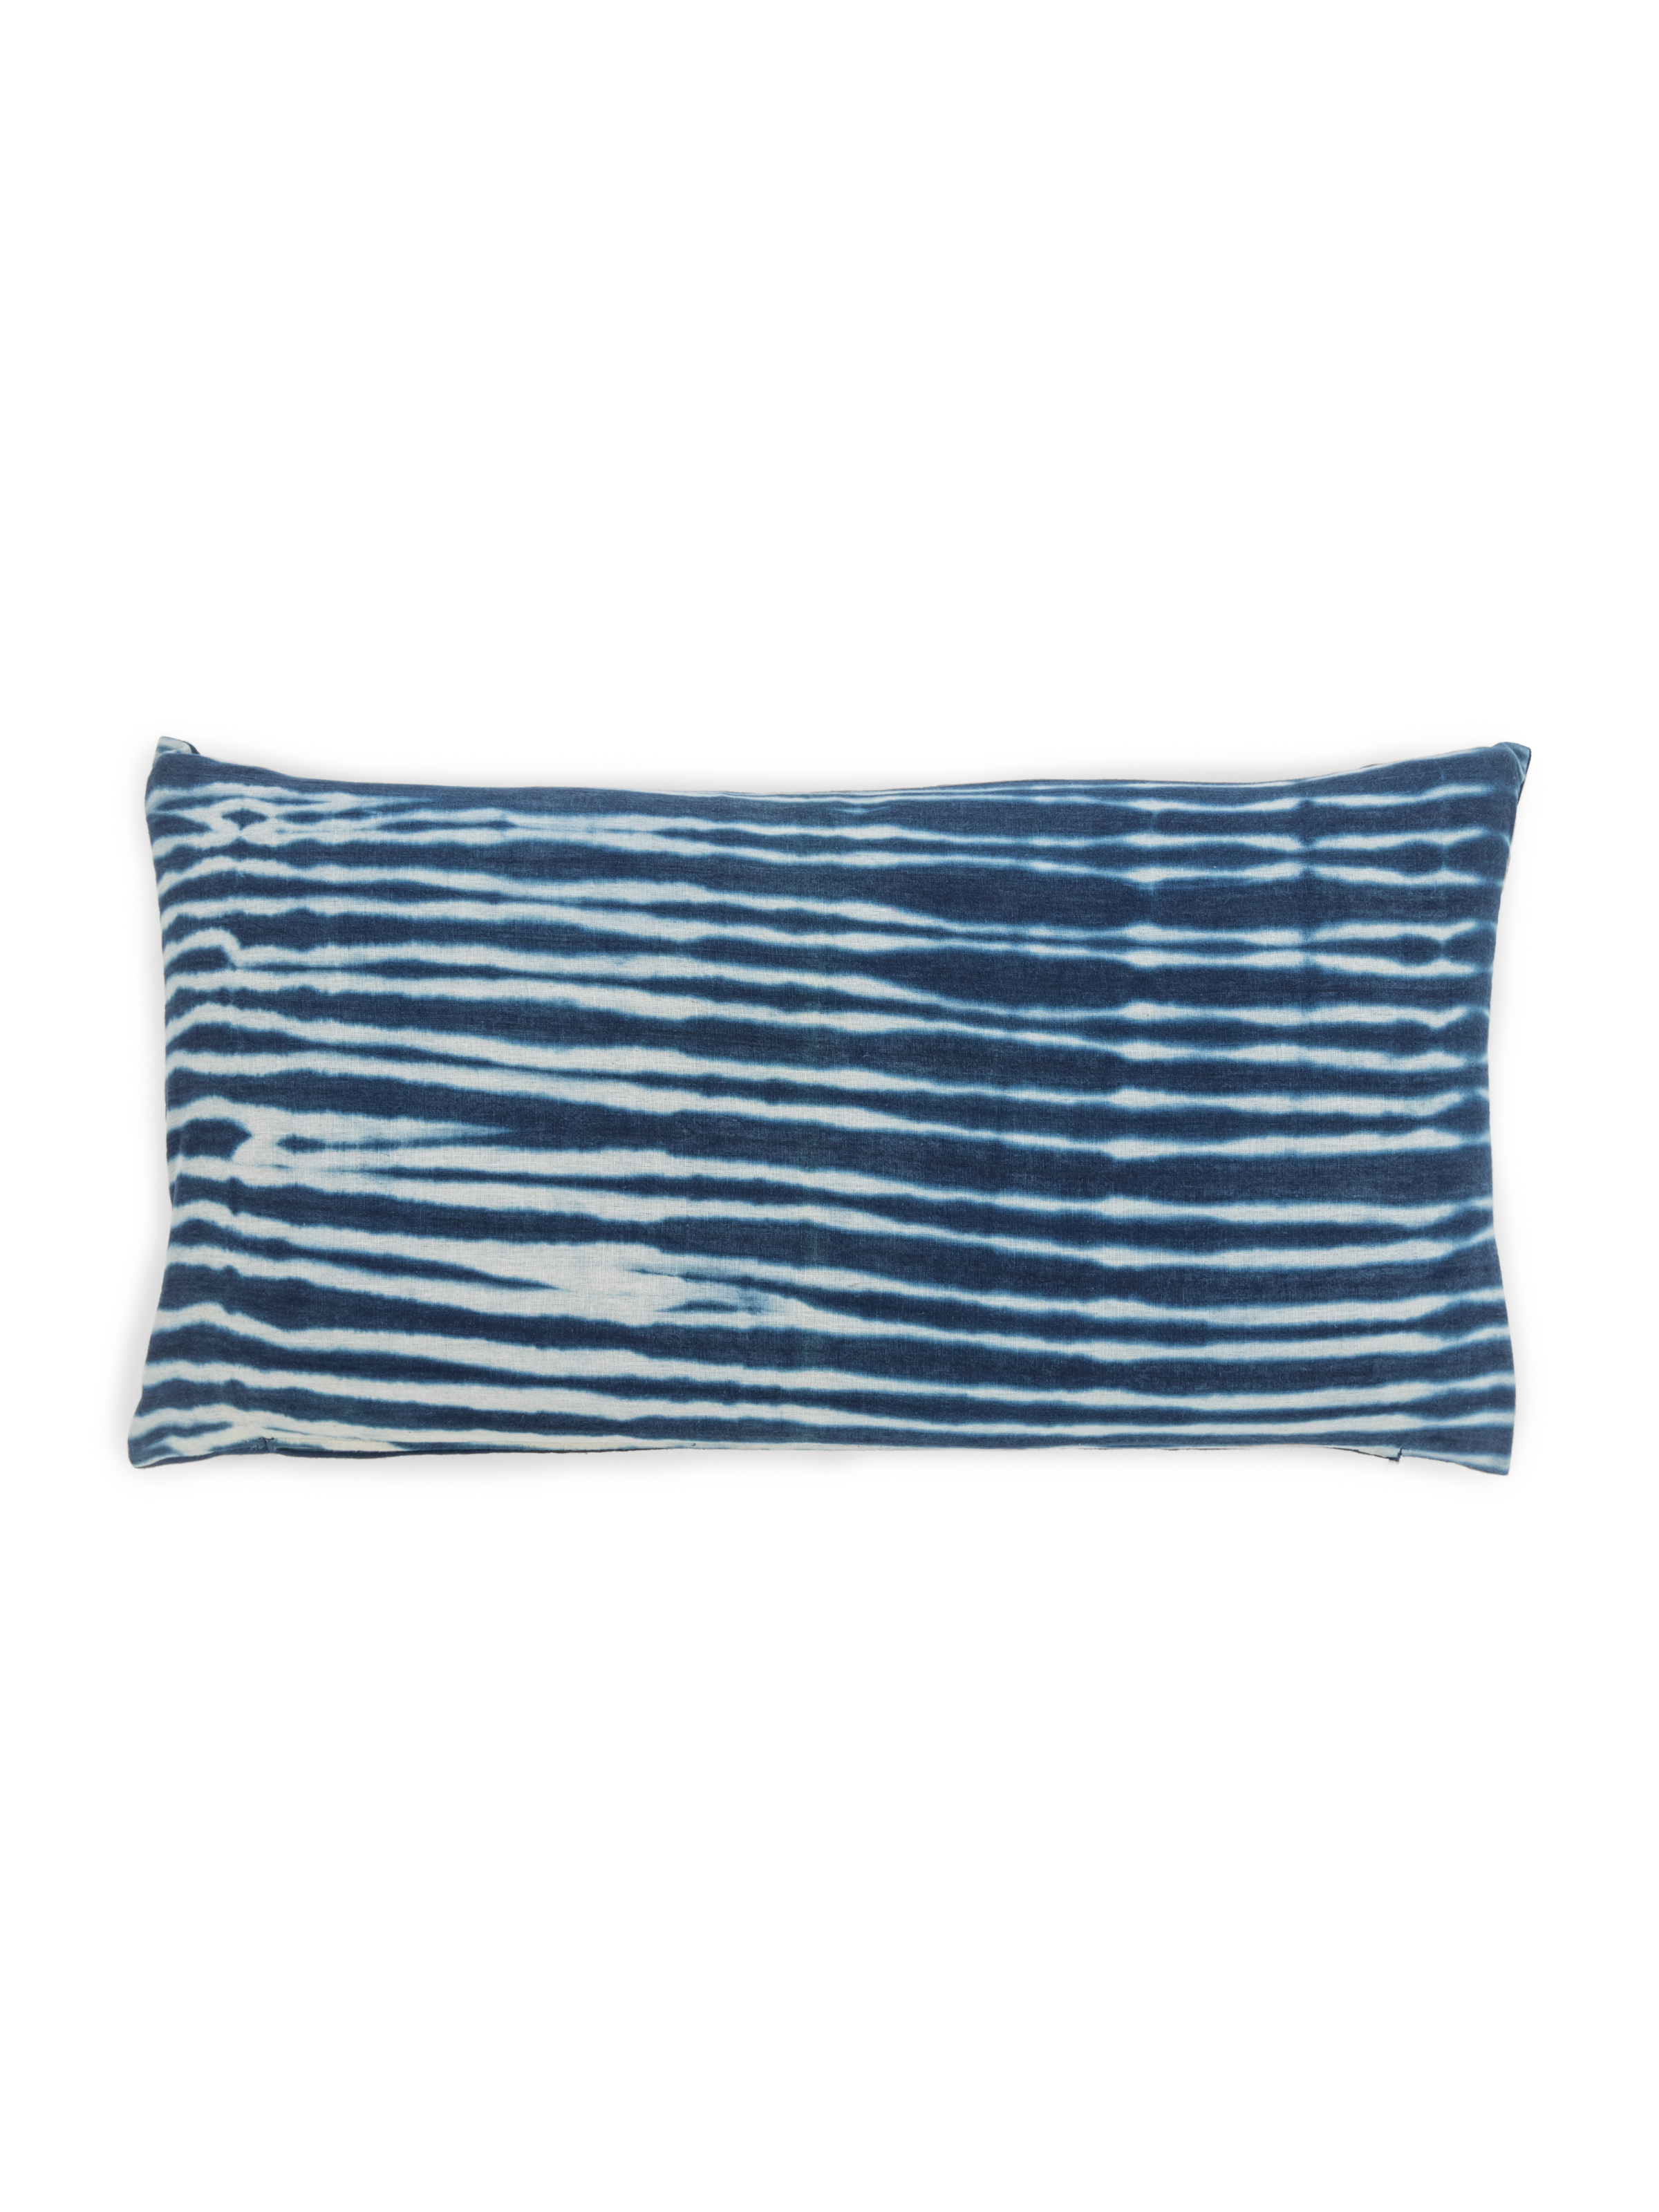 Indigo Stripe Tye Dye Lumbar Pillow